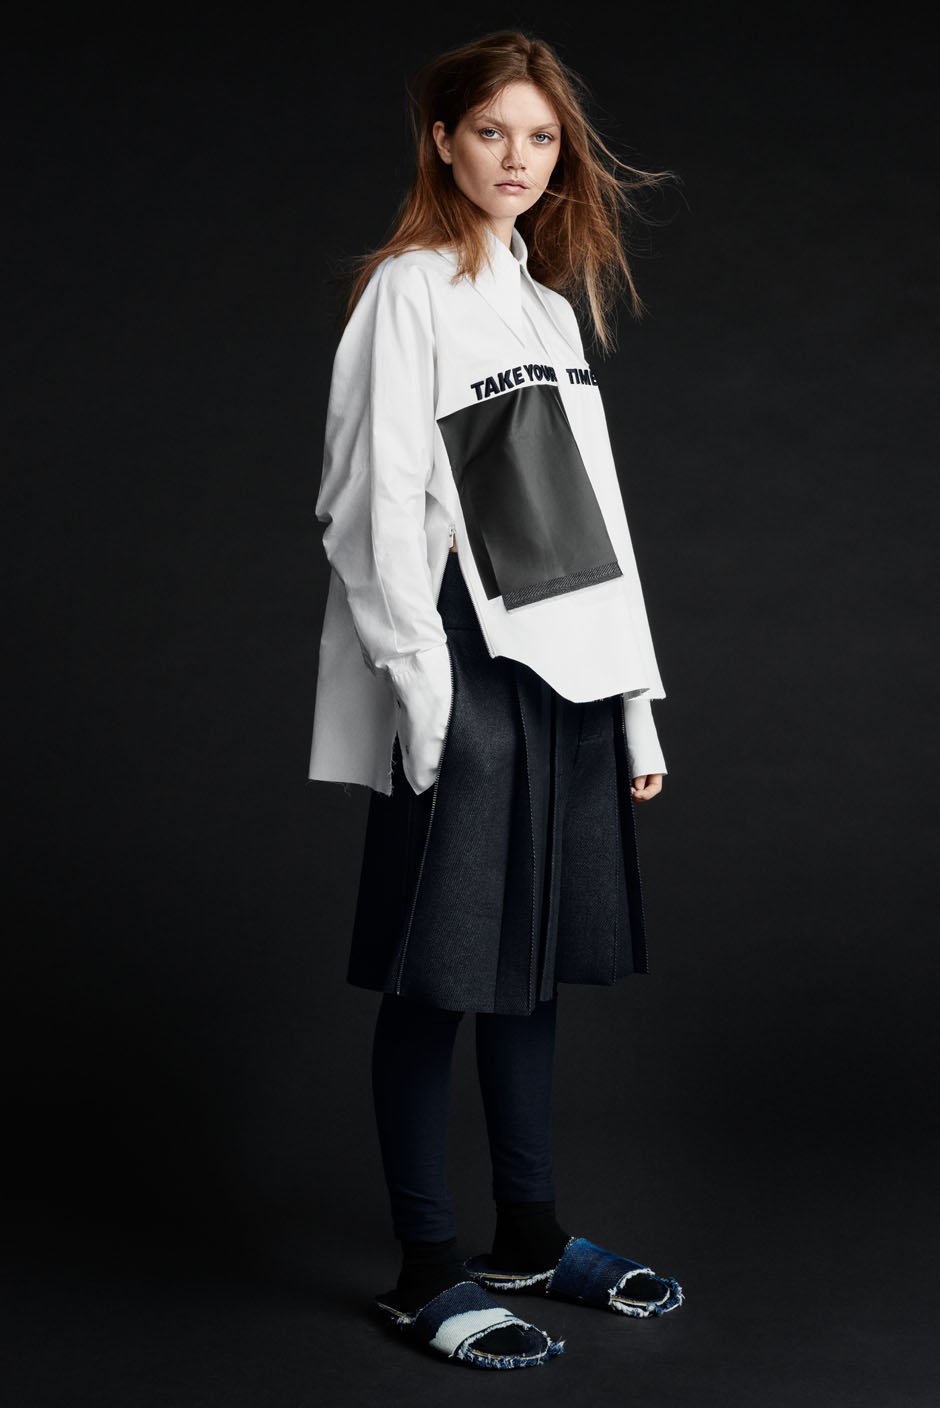 H&M Design Awards 2015 Winner - Ximon Lee - nitrolicious.com